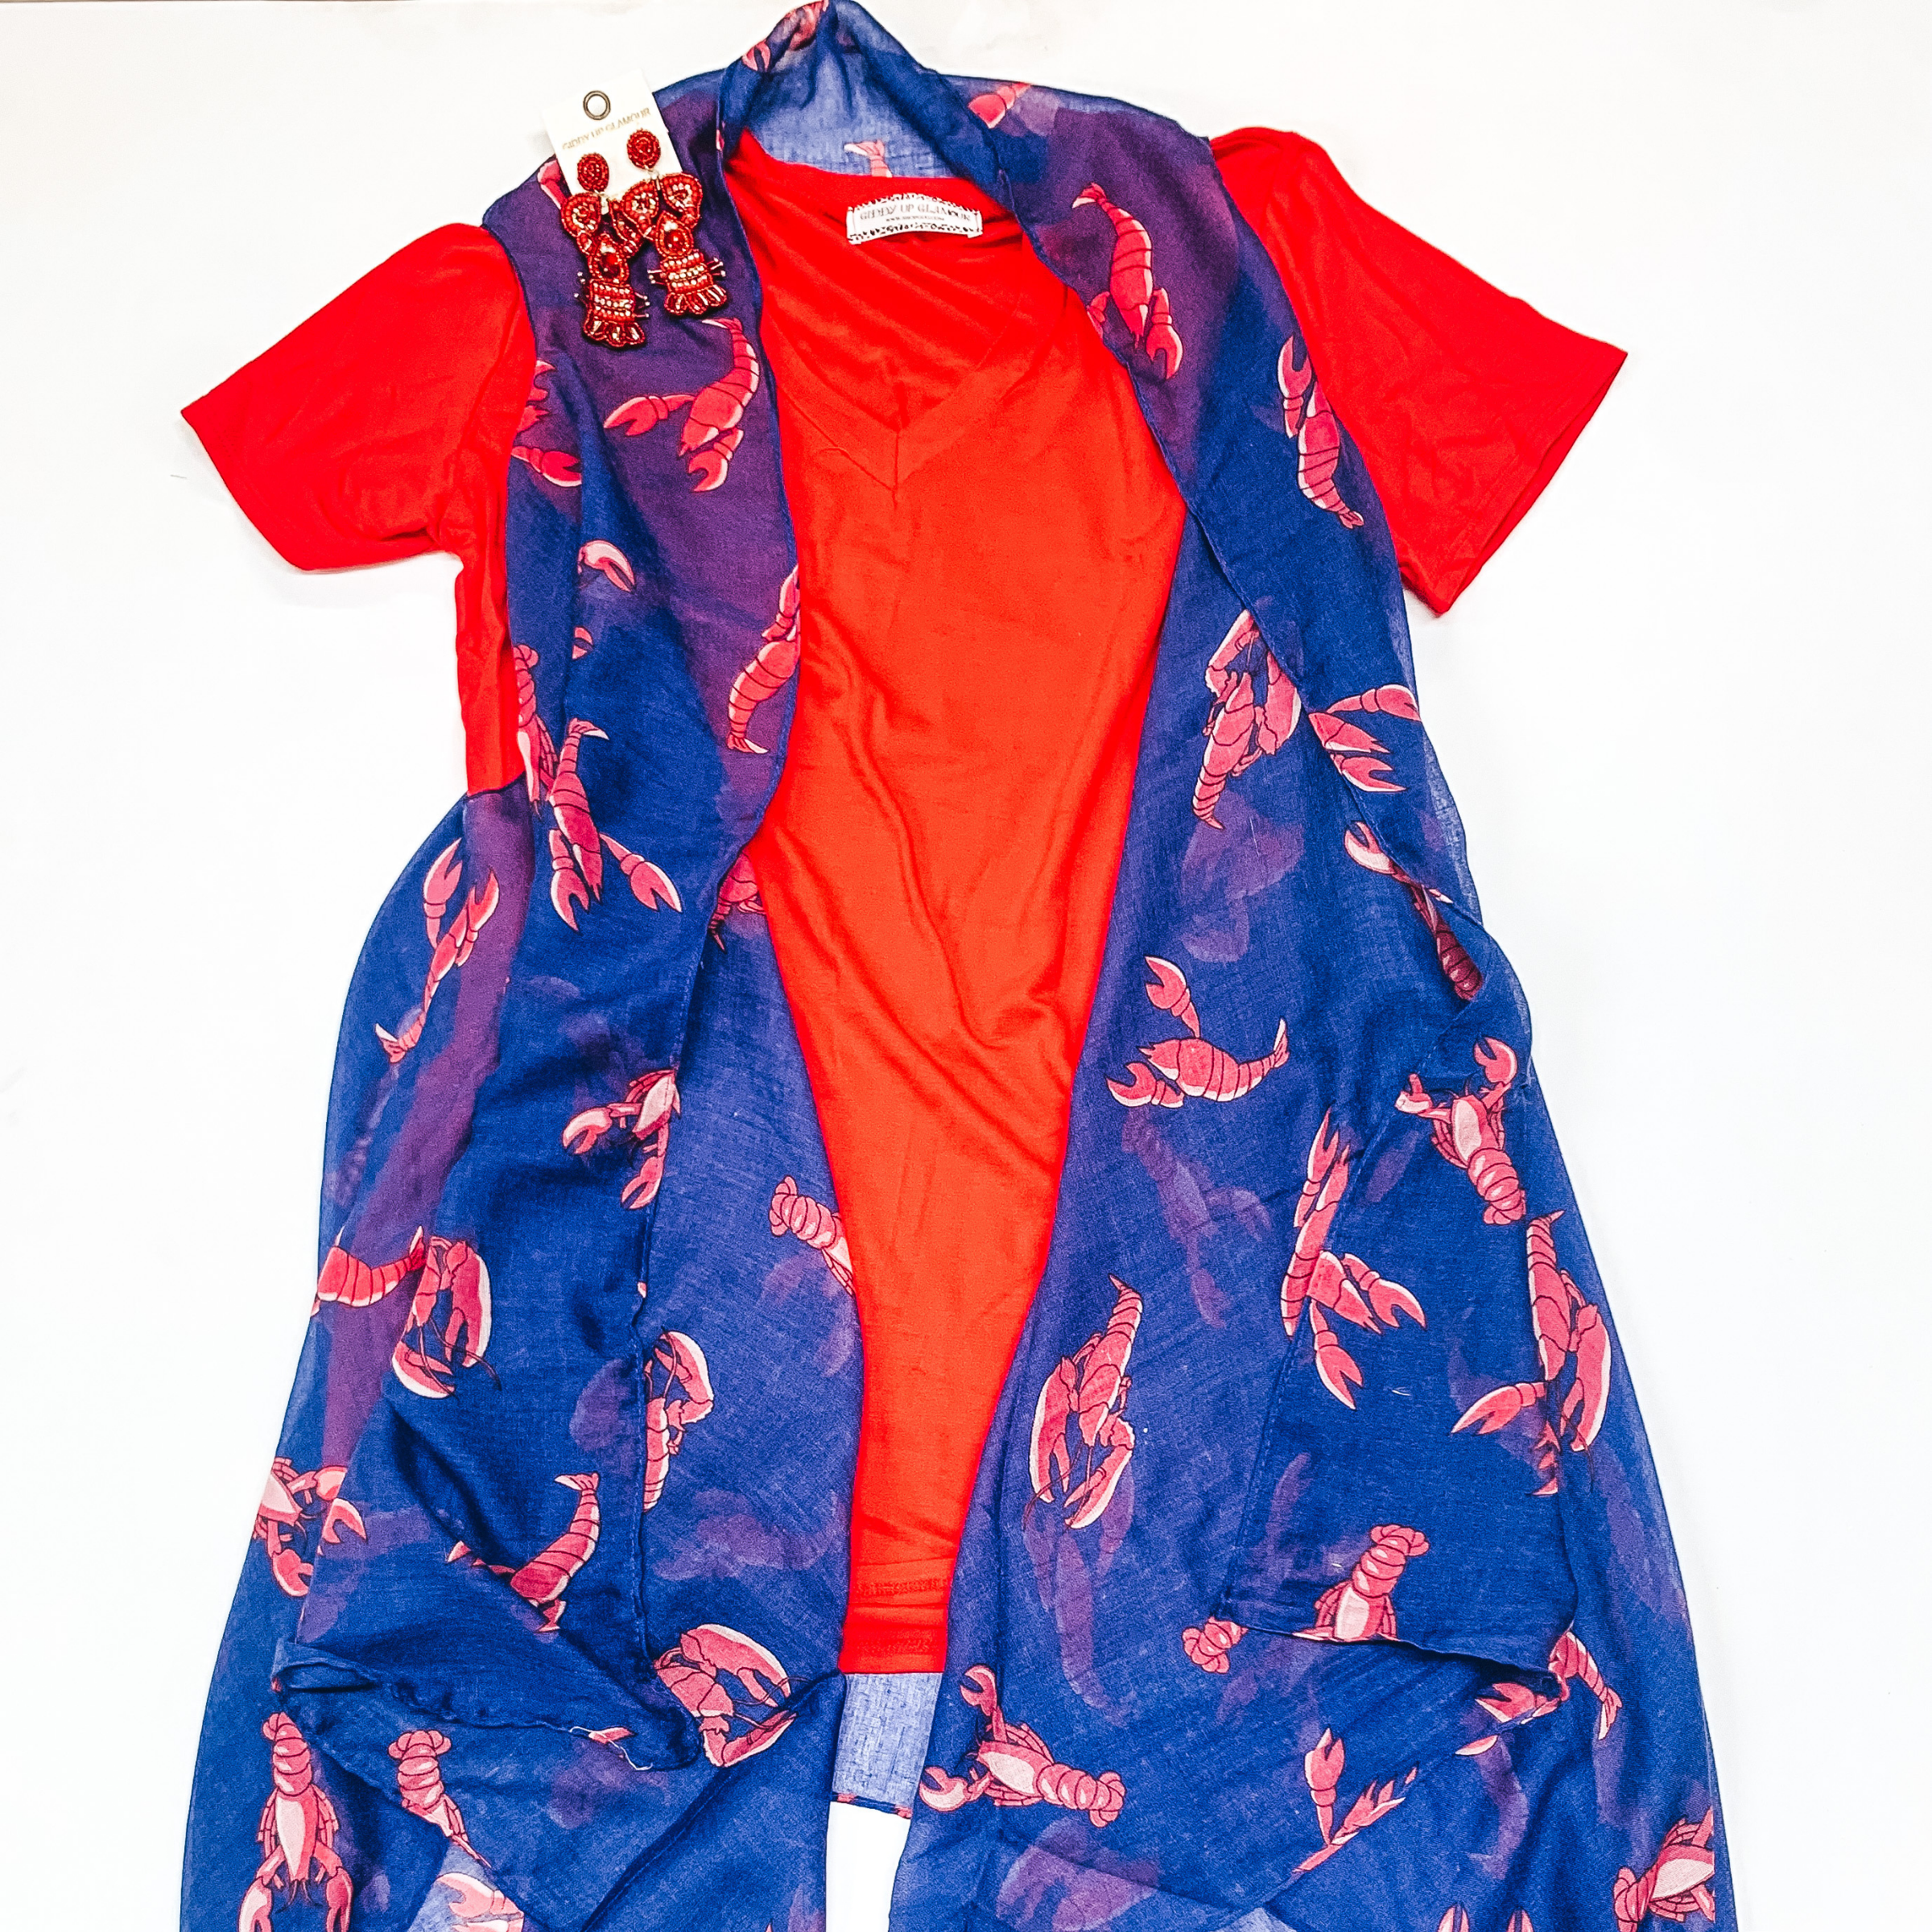 I Wanna Be Loved Bayou Sheer Crawfish Vest in Royal Blue - Giddy Up Glamour Boutique